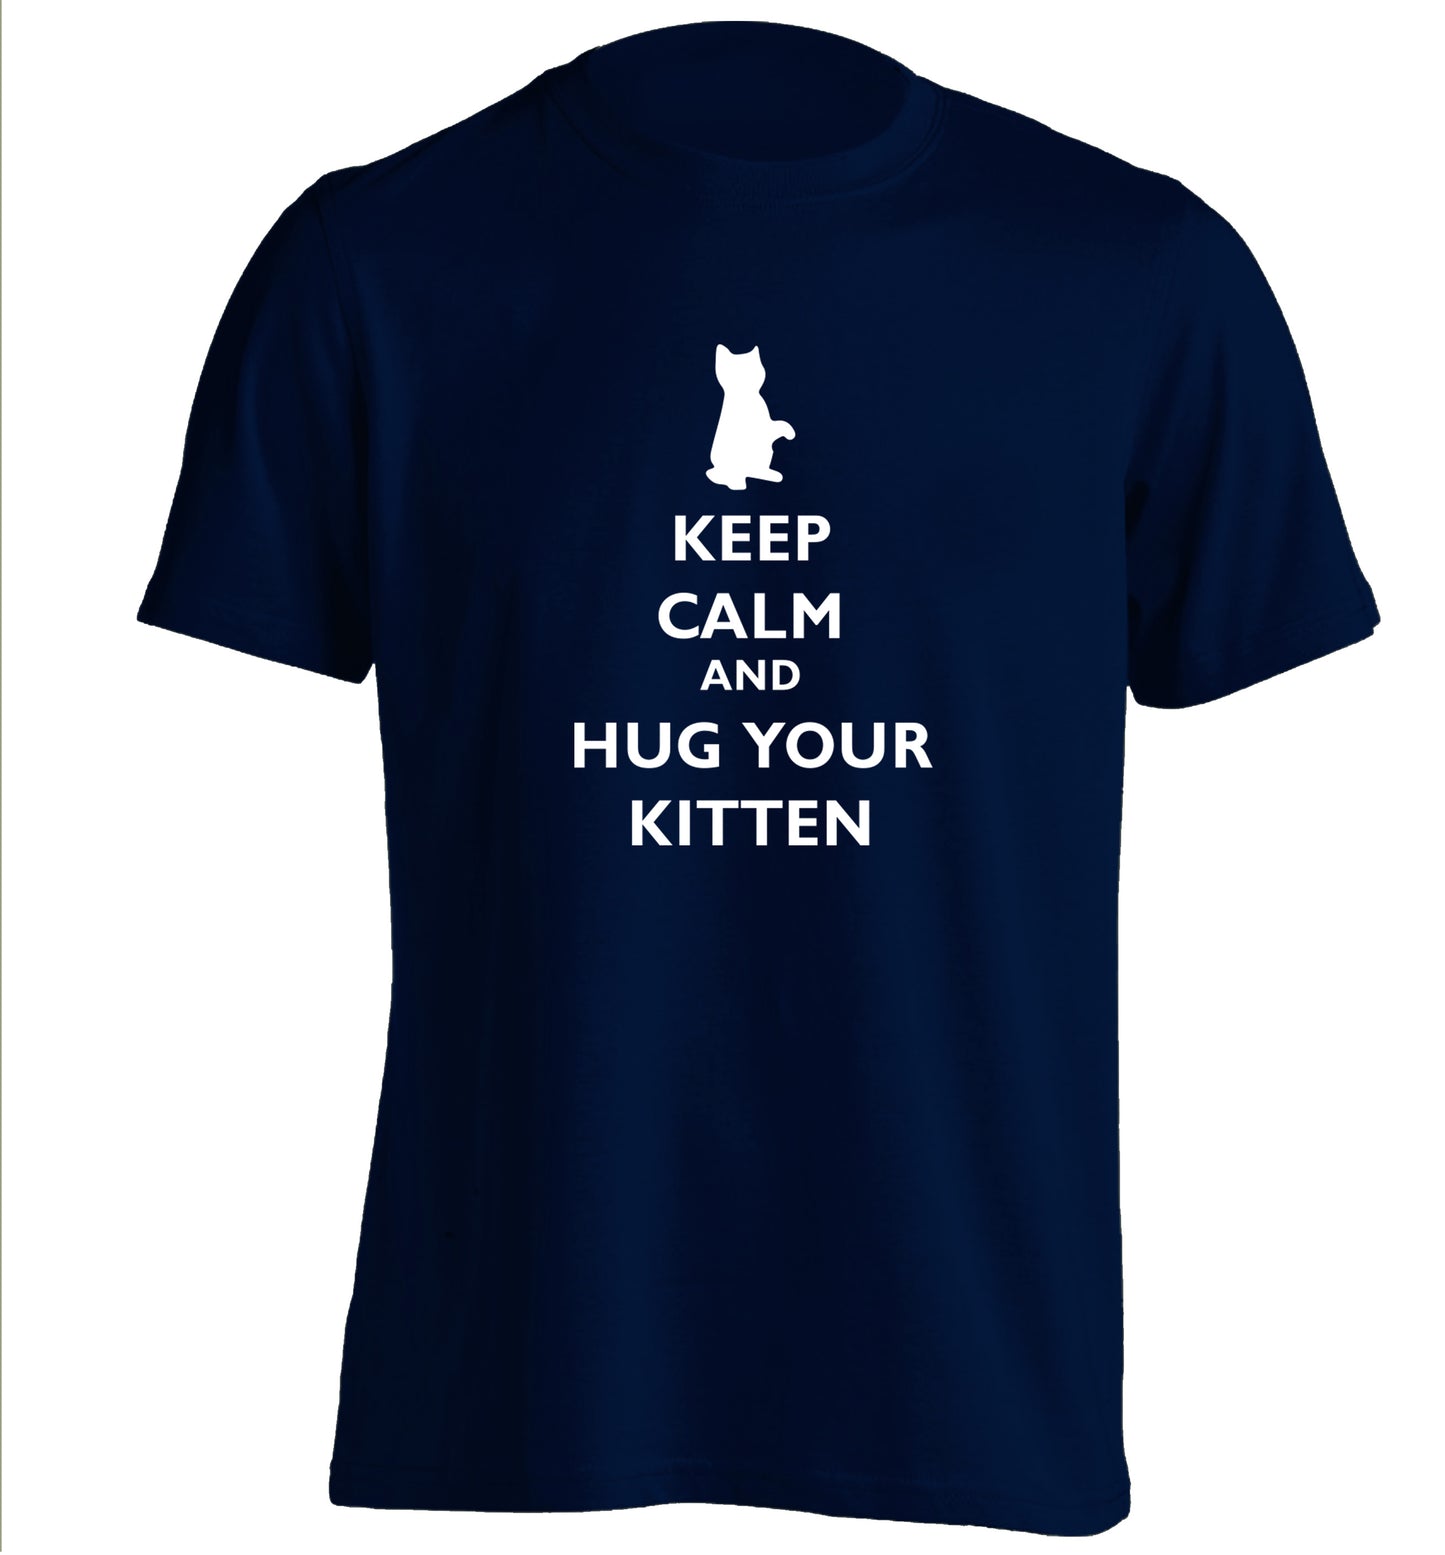 Keep calm and hug your kitten adults unisex navy Tshirt 2XL